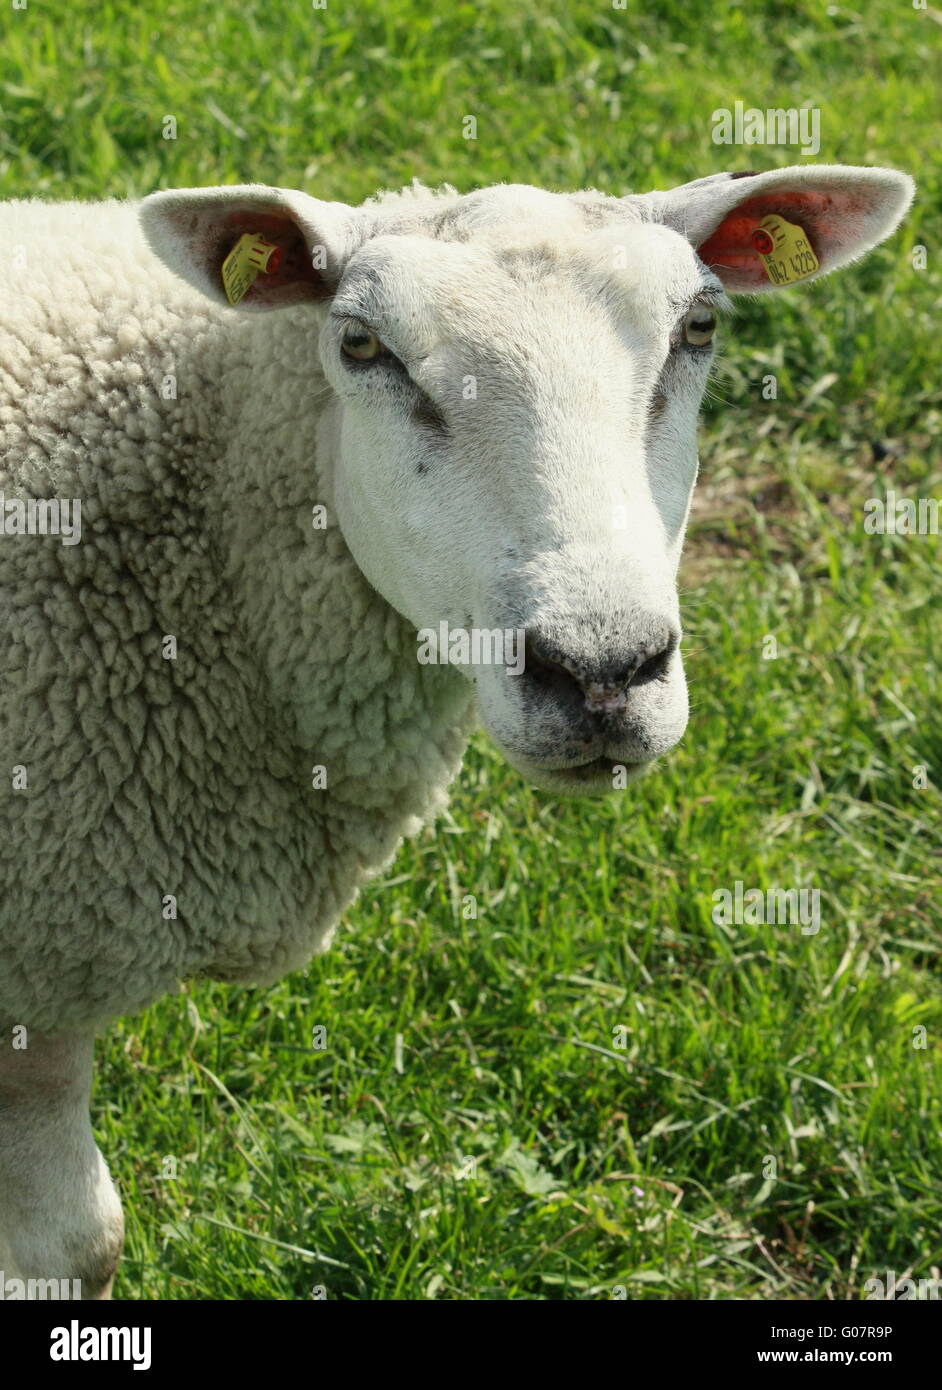 Sheep portrait, animal face Stock Photo